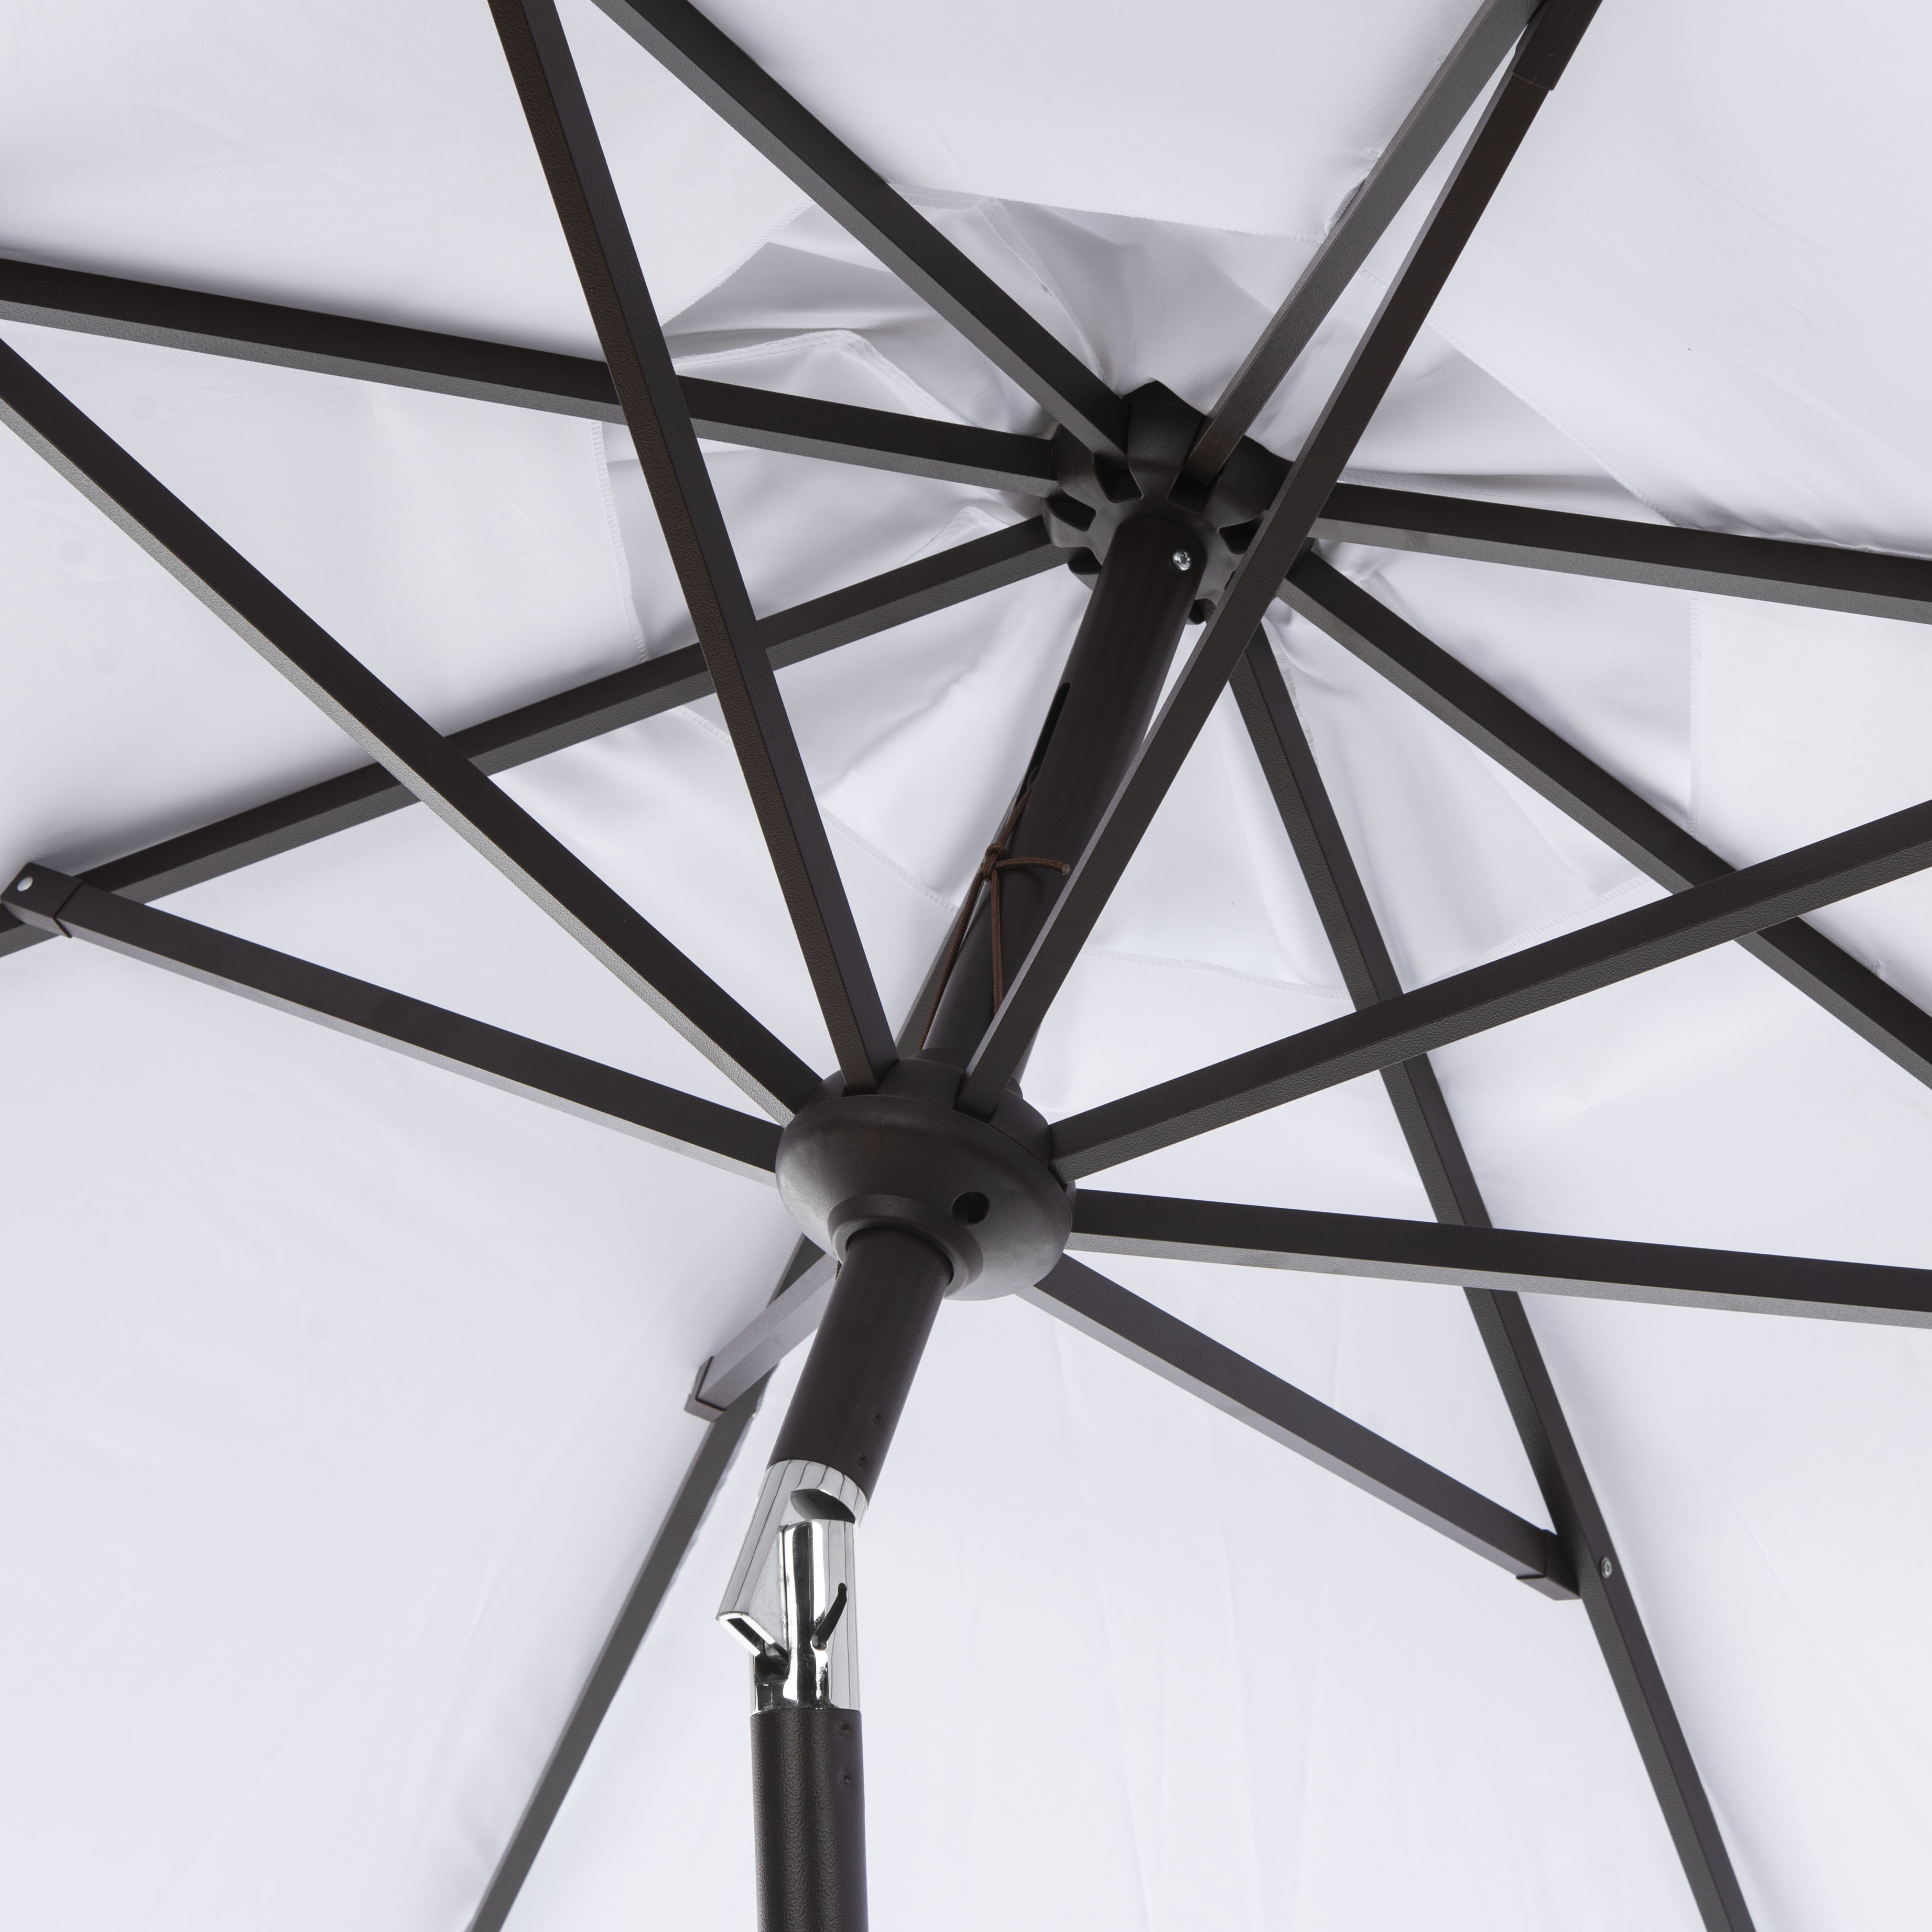 Uv Resistant Ortega 9 Ft Auto Tilt Crank Umbrella - White - Safavieh - Image 2